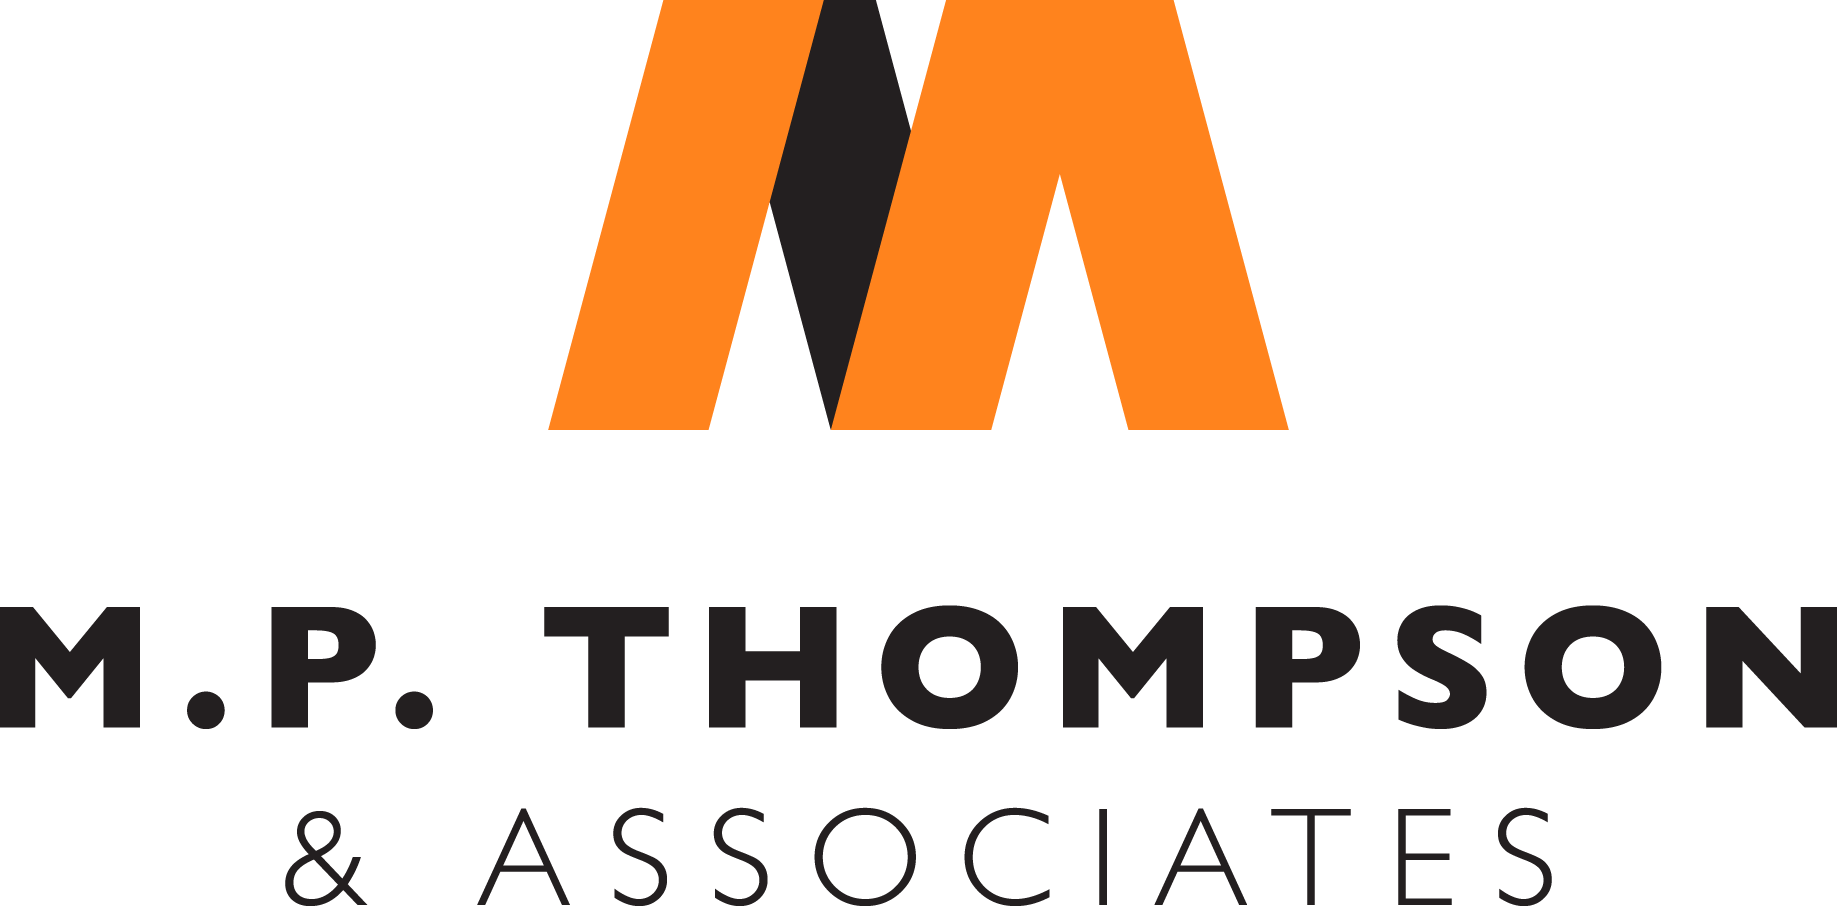 M.P. Thompson & Associates